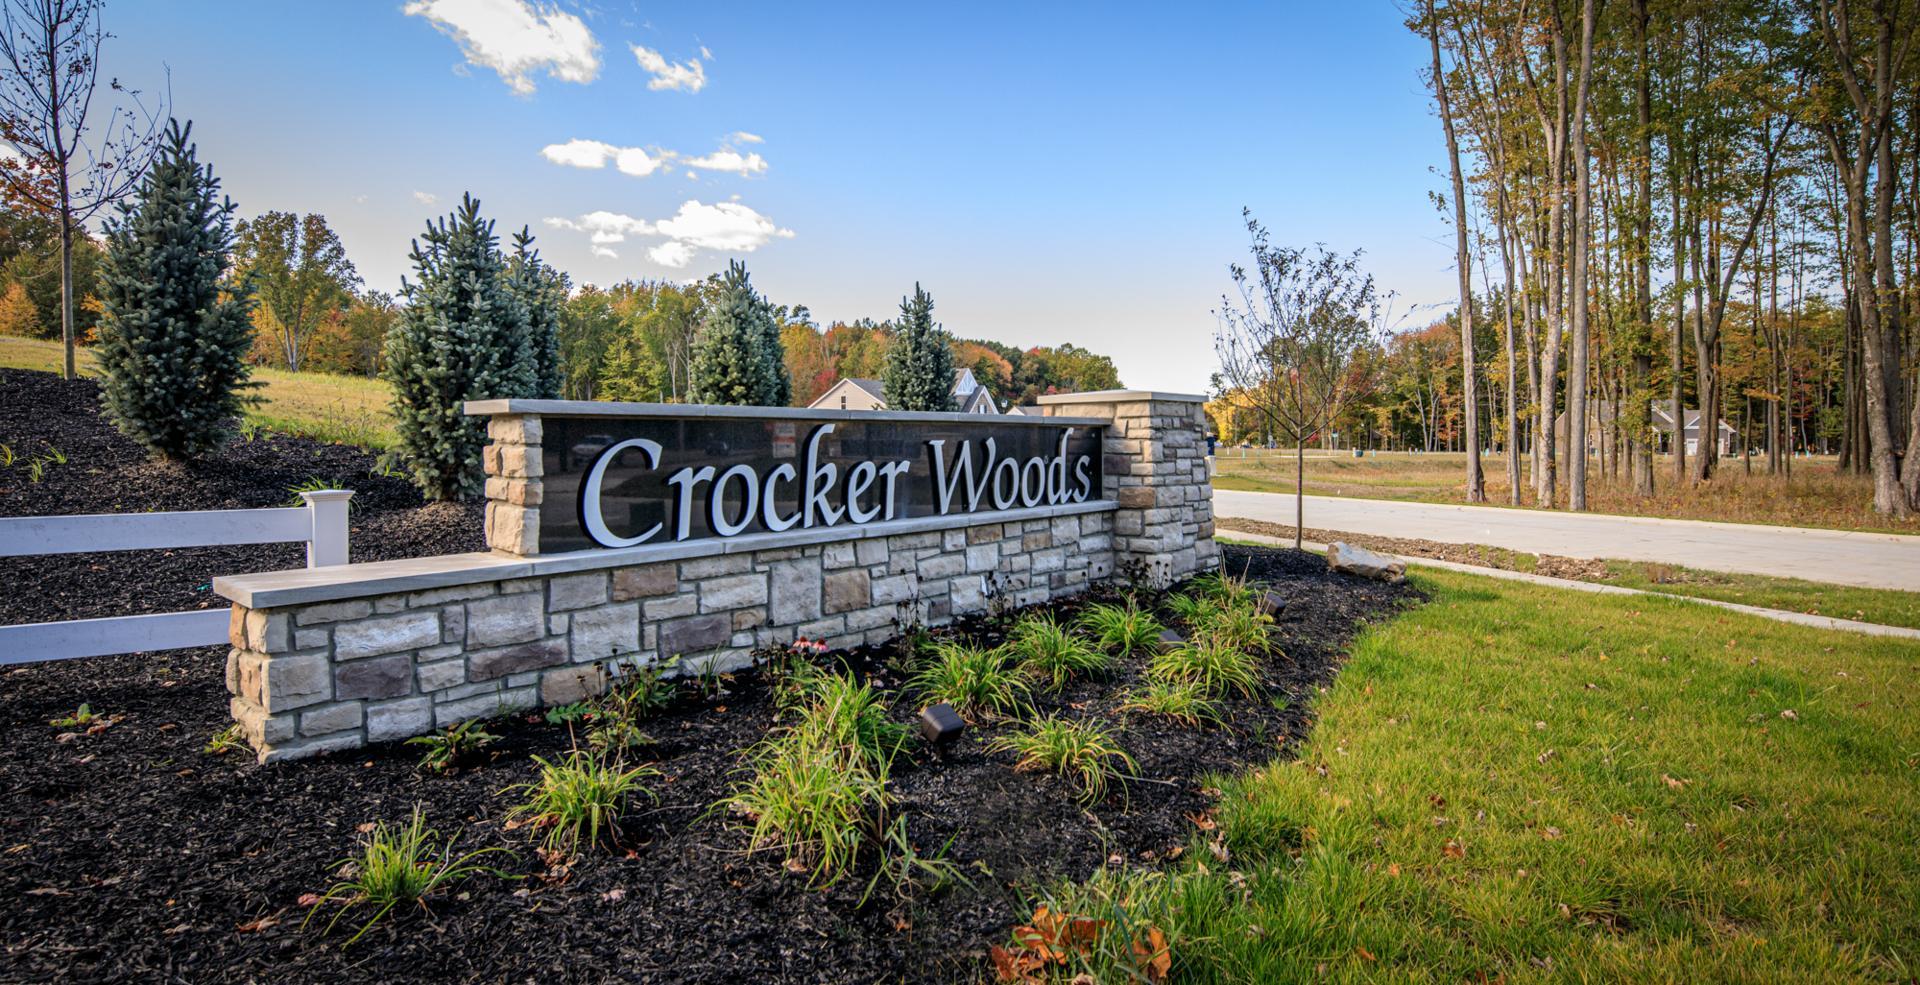 The Crocker Woods Entrance